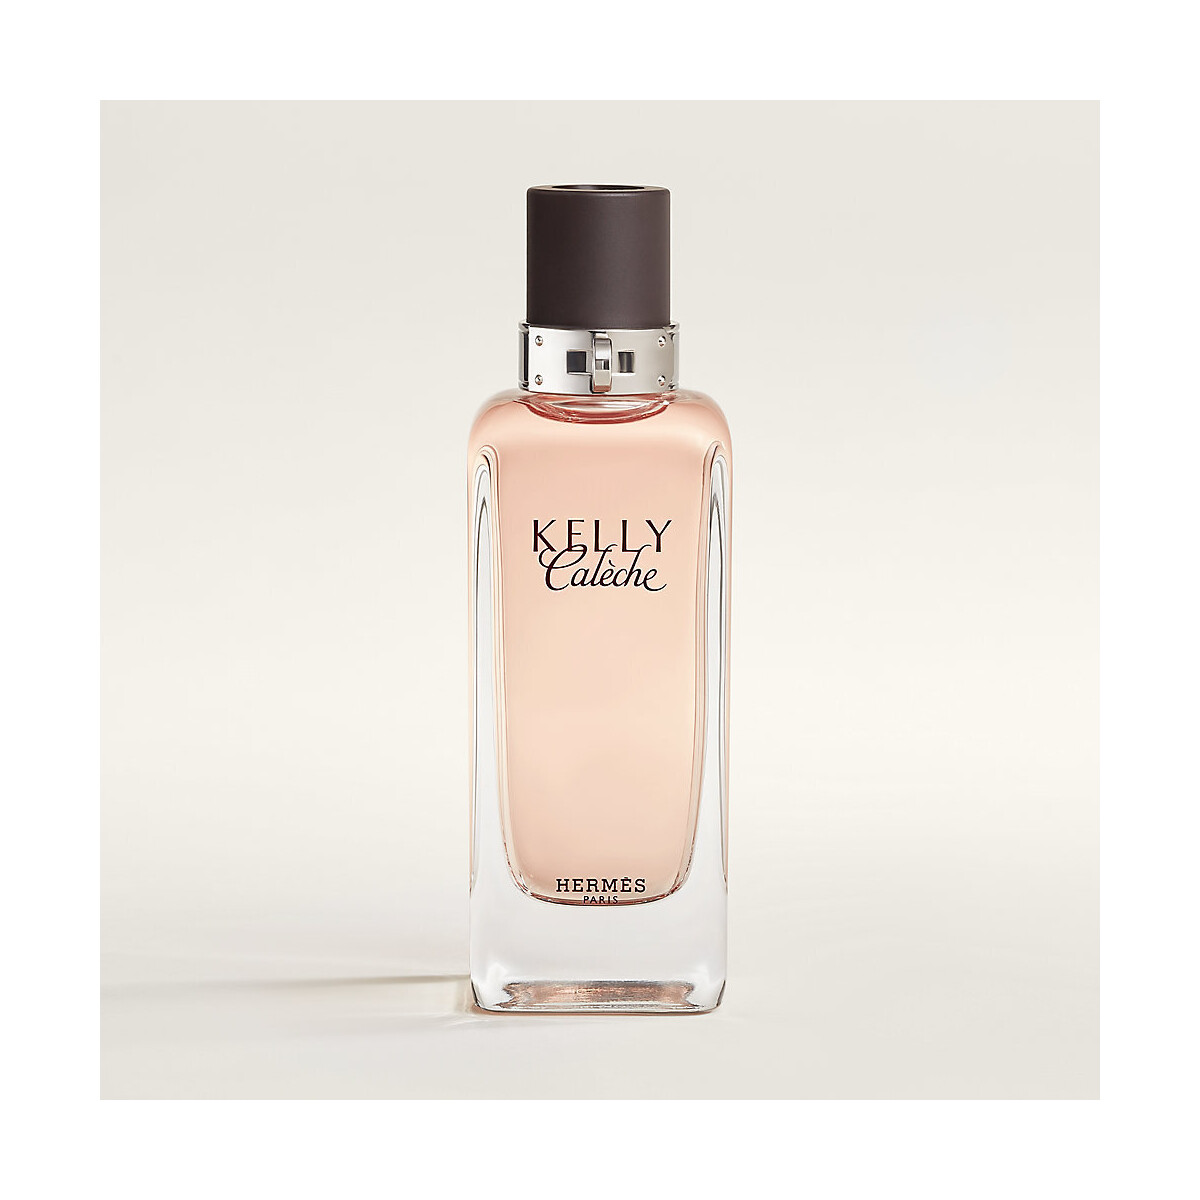 Beauty Damen Eau de parfum  Hermès Paris Kelly Caleche - Parfüm - 100ml - VERDAMPFER Kelly Caleche - perfume - 100ml - spray